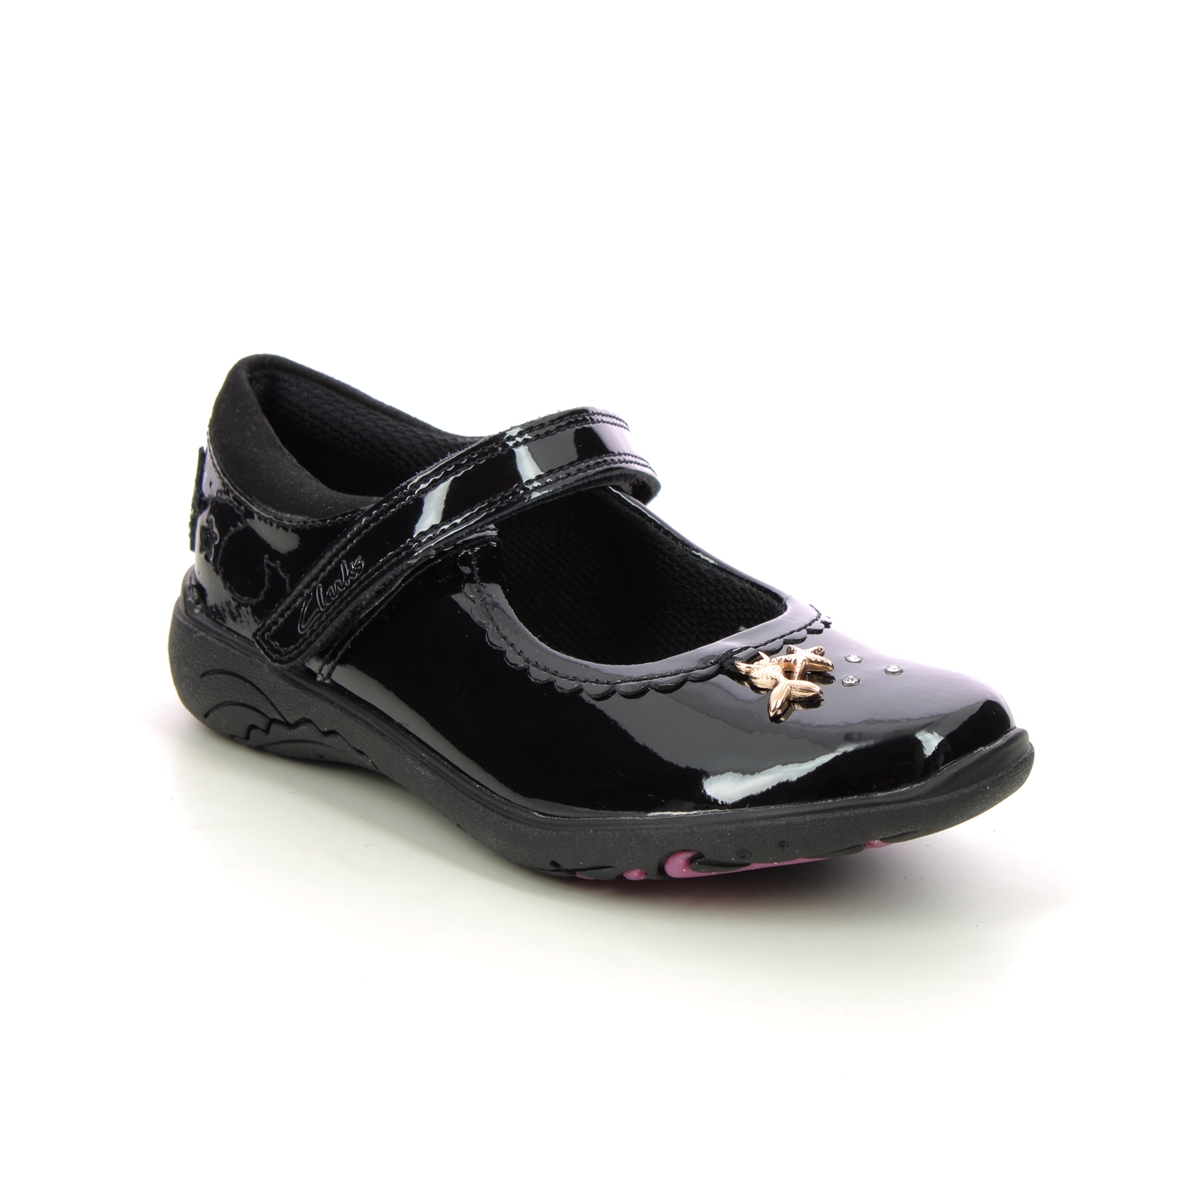 Clarks Relda Sea K Mary Jane Black Patent Kids Girls School Shoes 722417G In Size 11 In Plain Black Patent G Width Fitting For School For kids